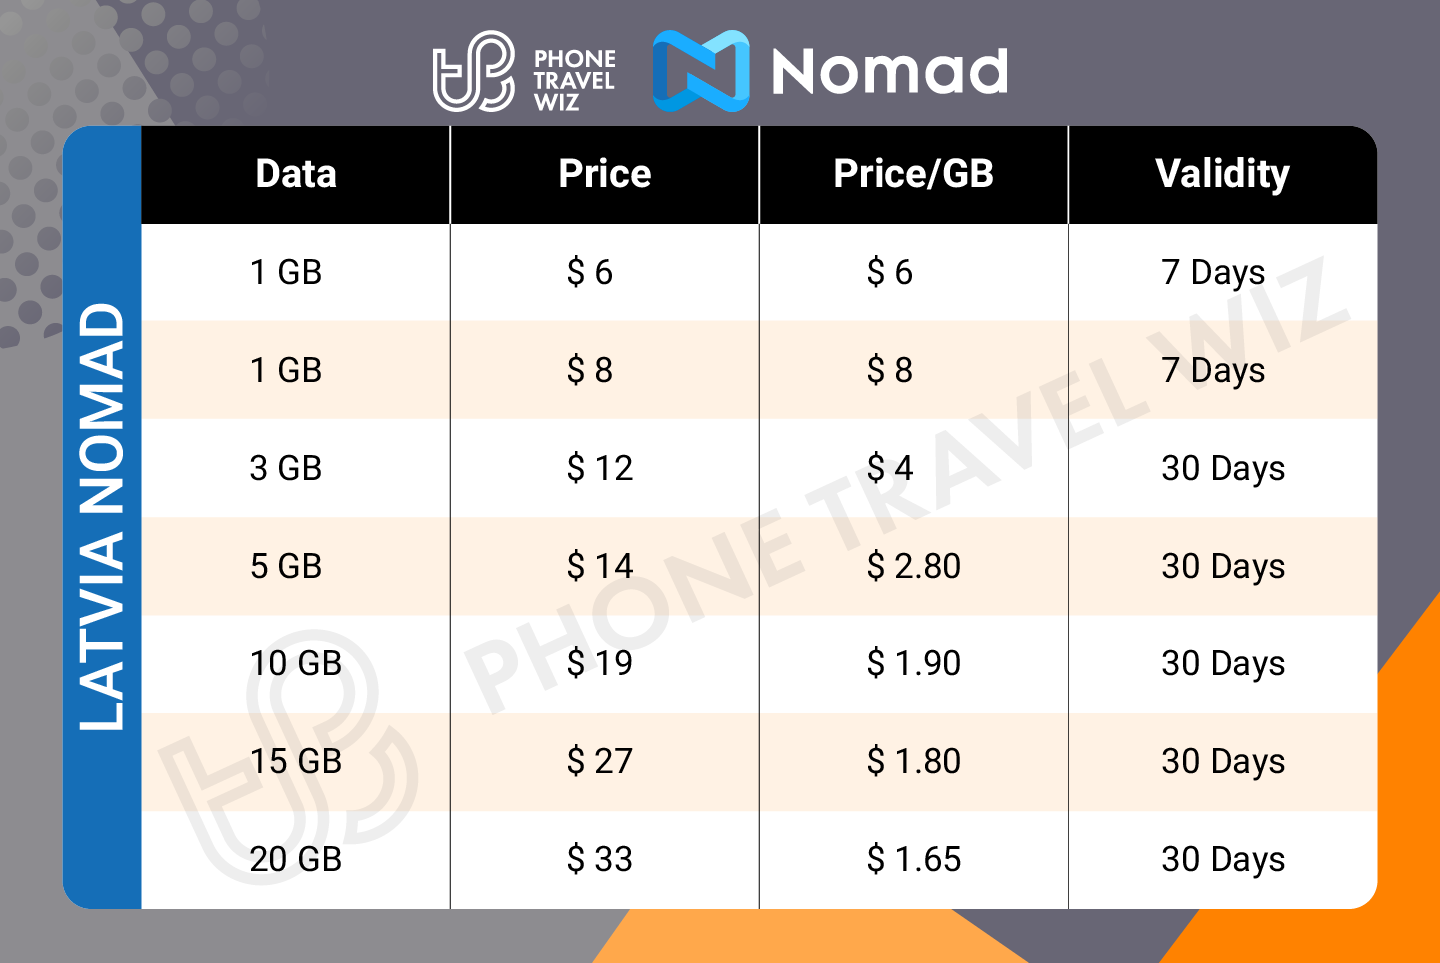 Nomad Latvia eSIM Price & Data Details Infographic by Phone Travel Wiz